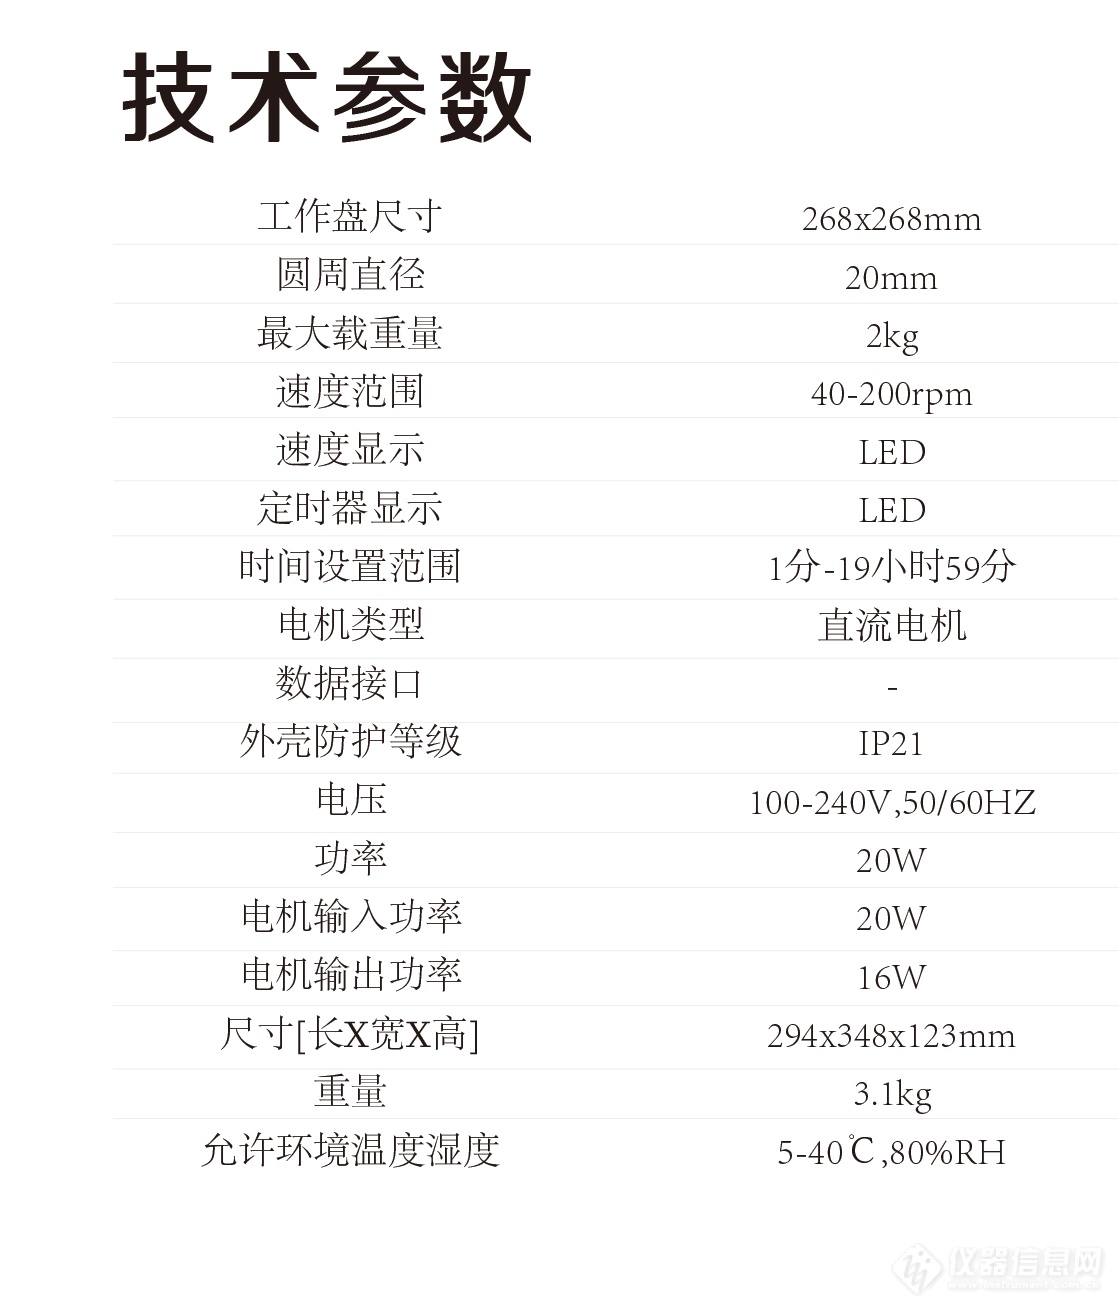 SK-O180-S LED数显圆周摇床 中文版彩页-CH.png